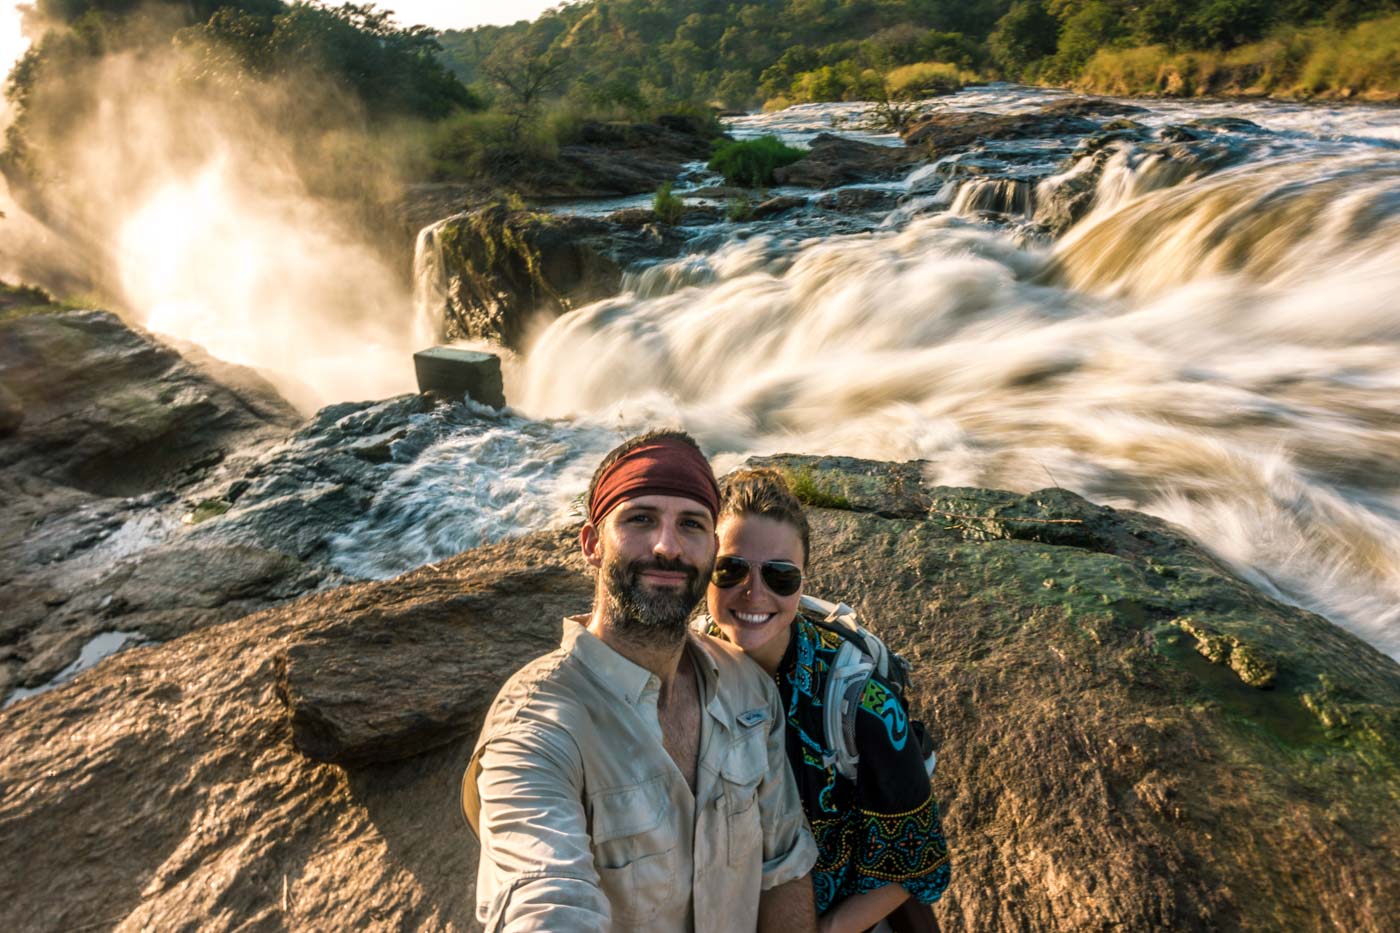 At Murchison Falls in Uganda